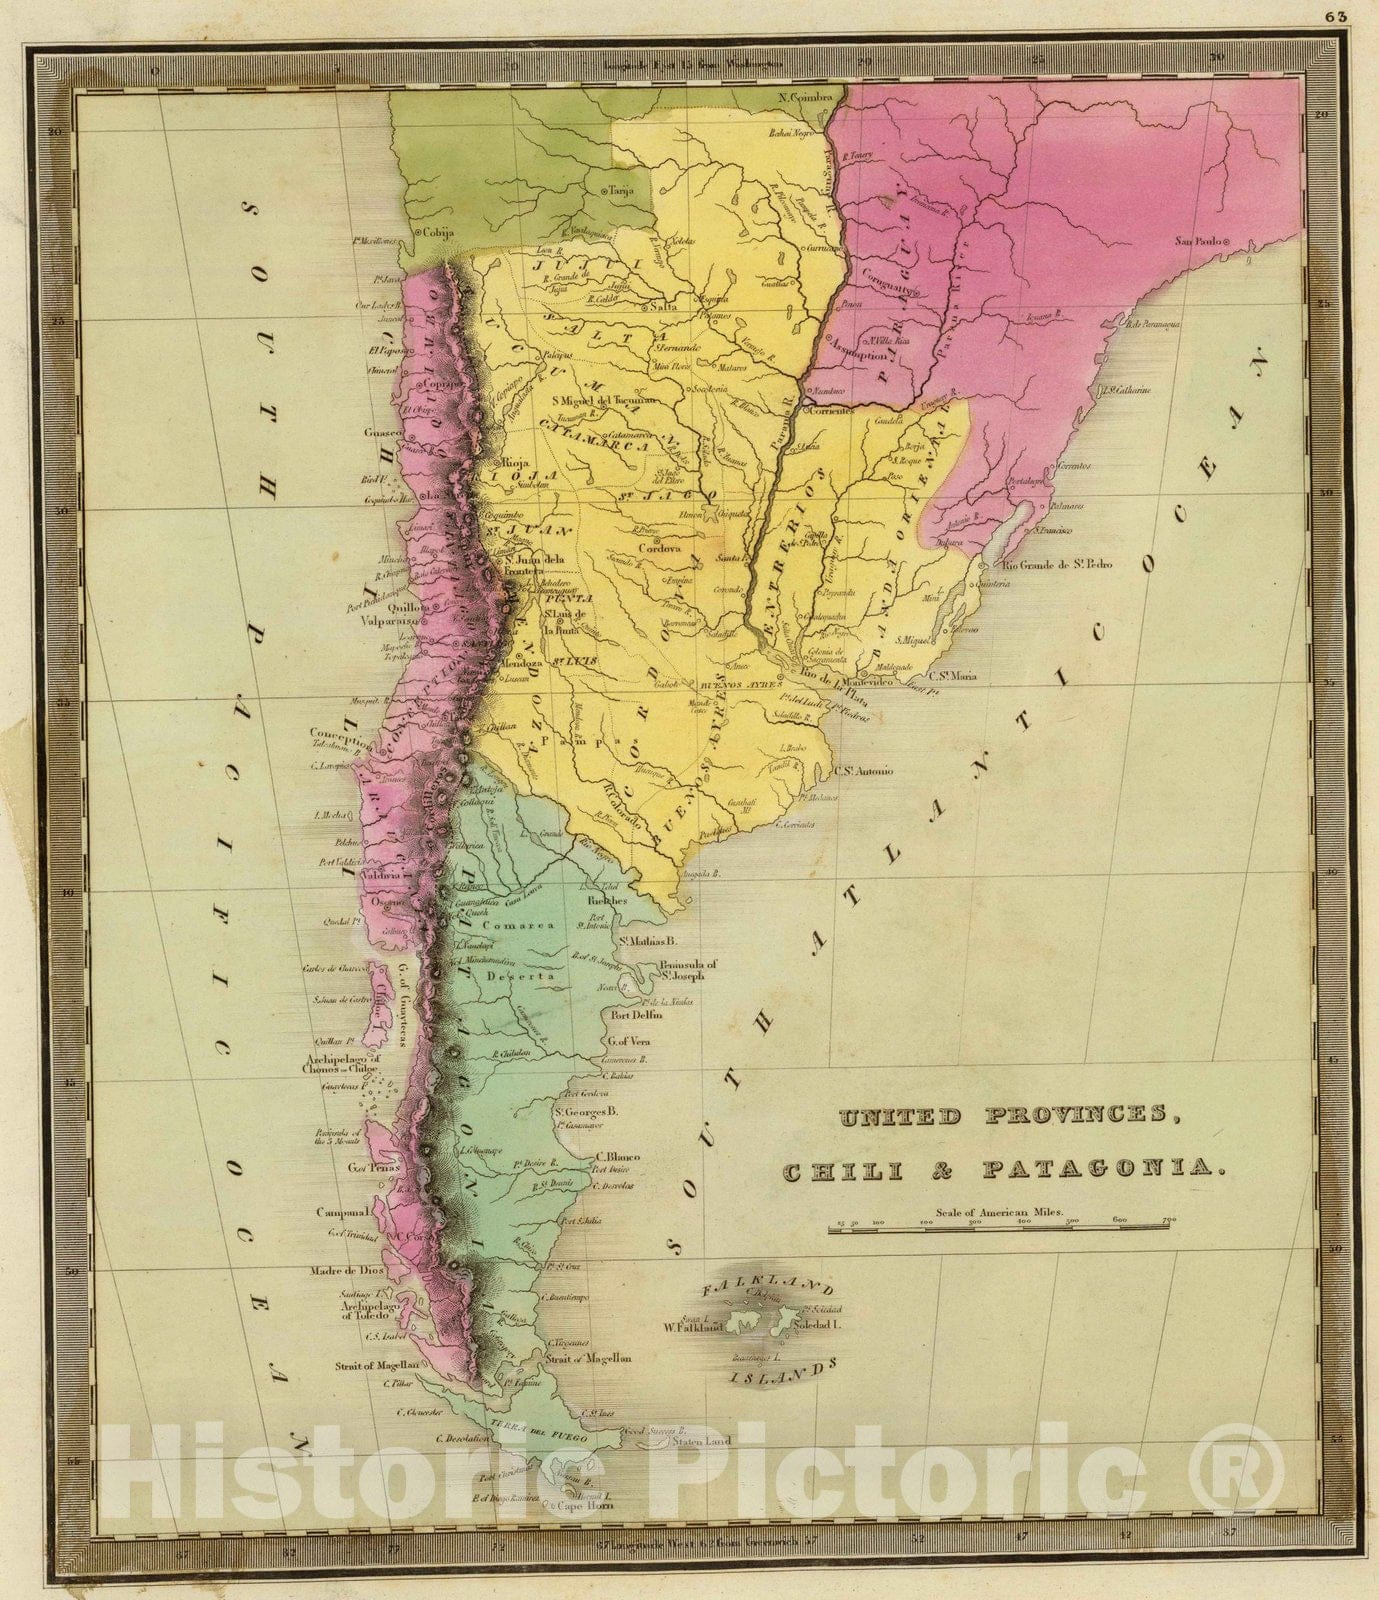 Historic Map : 1840 United Provinces, Chili & Patagonia. - Vintage Wall Art